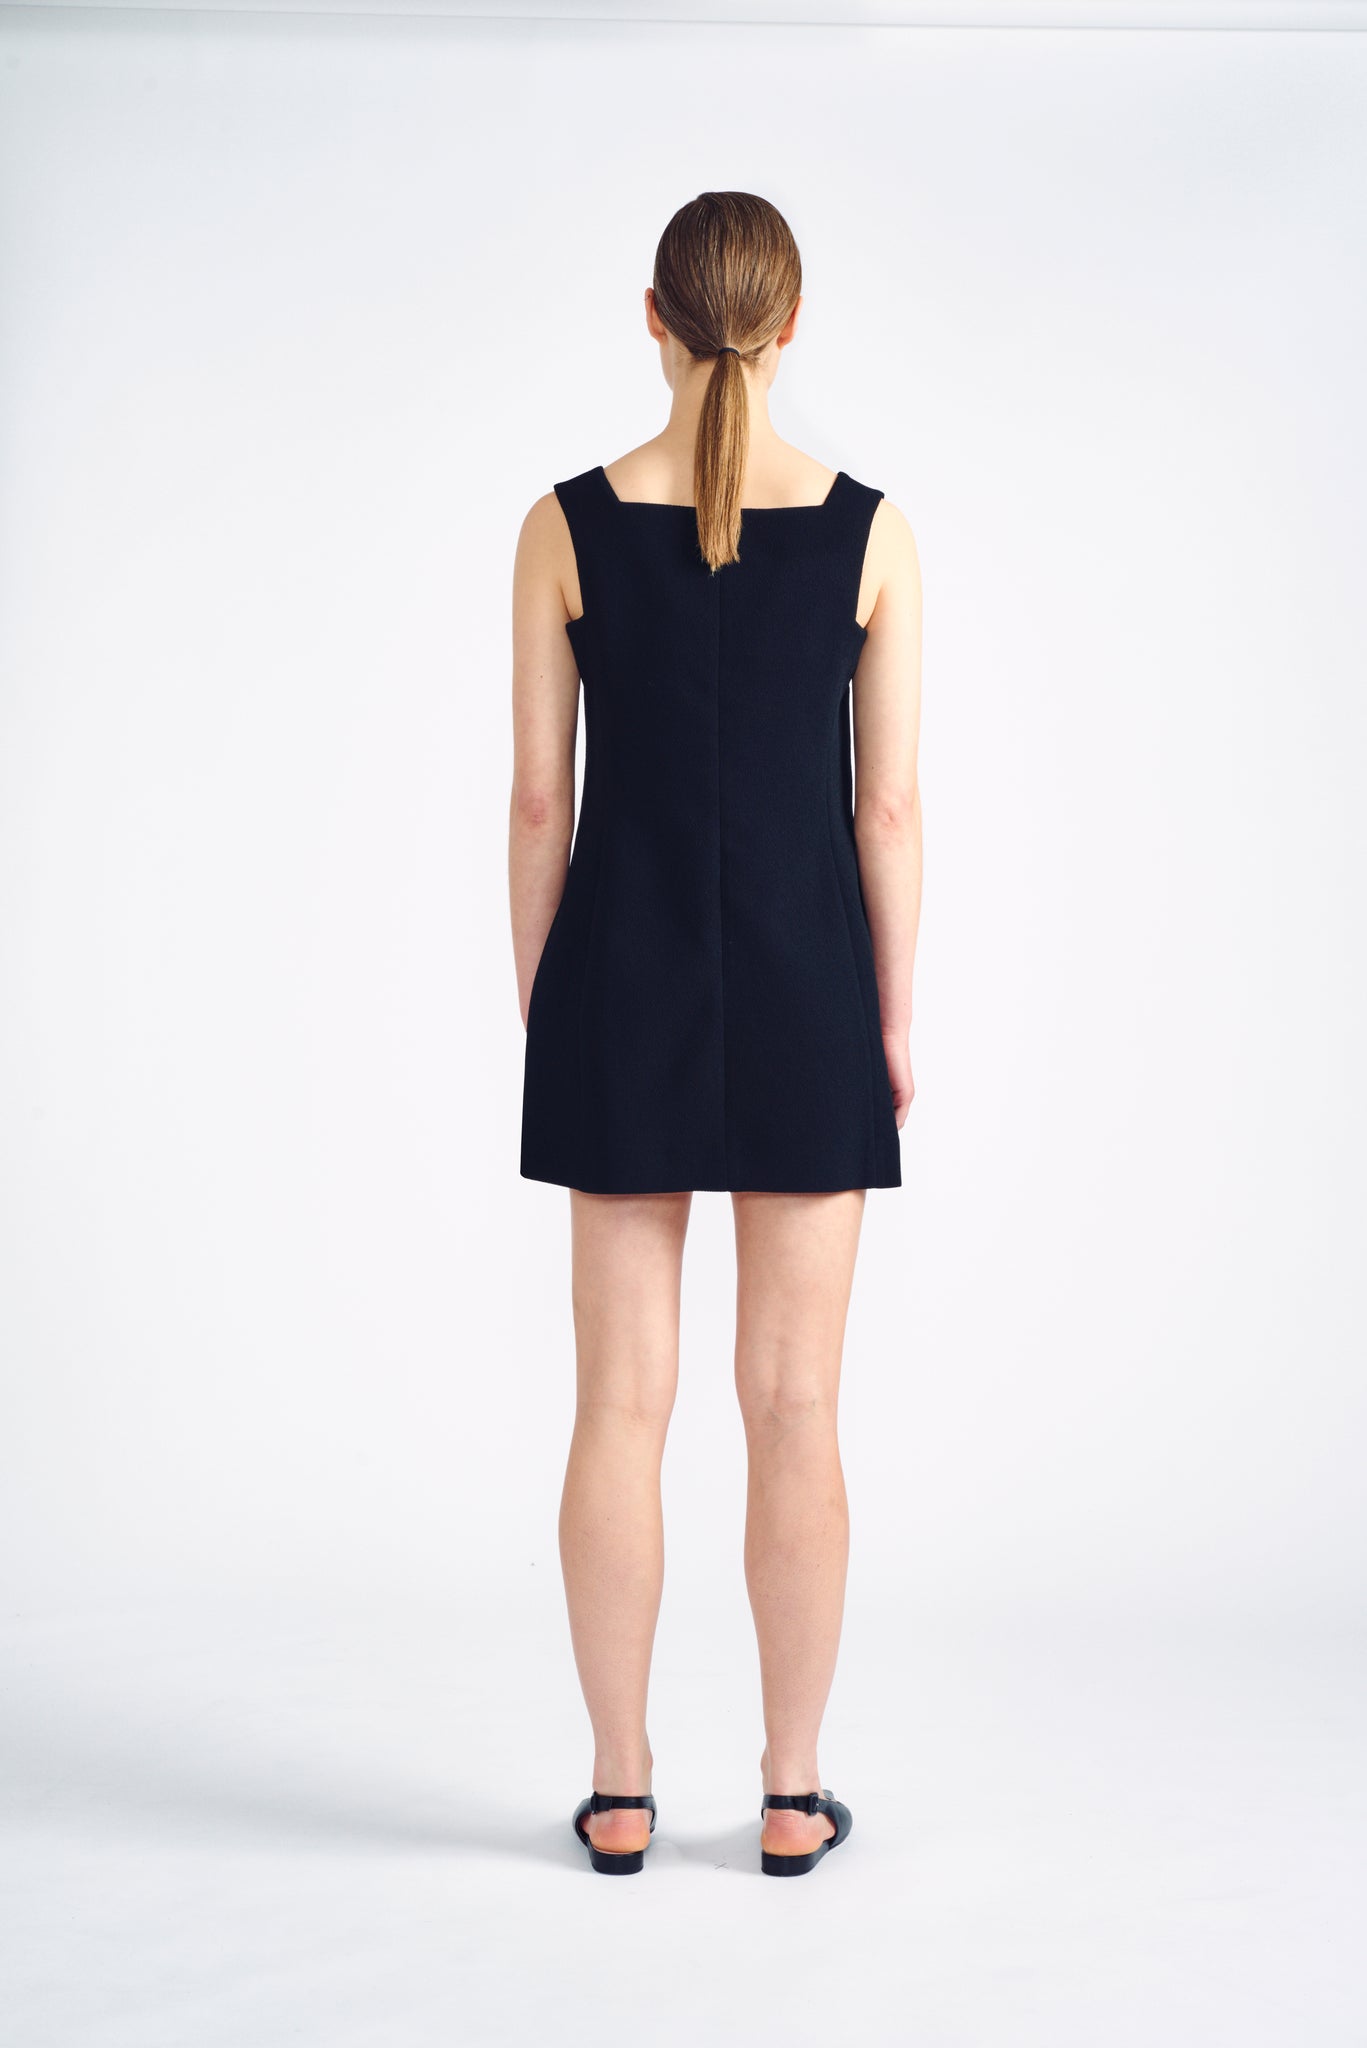 Analiese Top | Black Sleeveless Tunic Dress Top | Emilia Wickstead